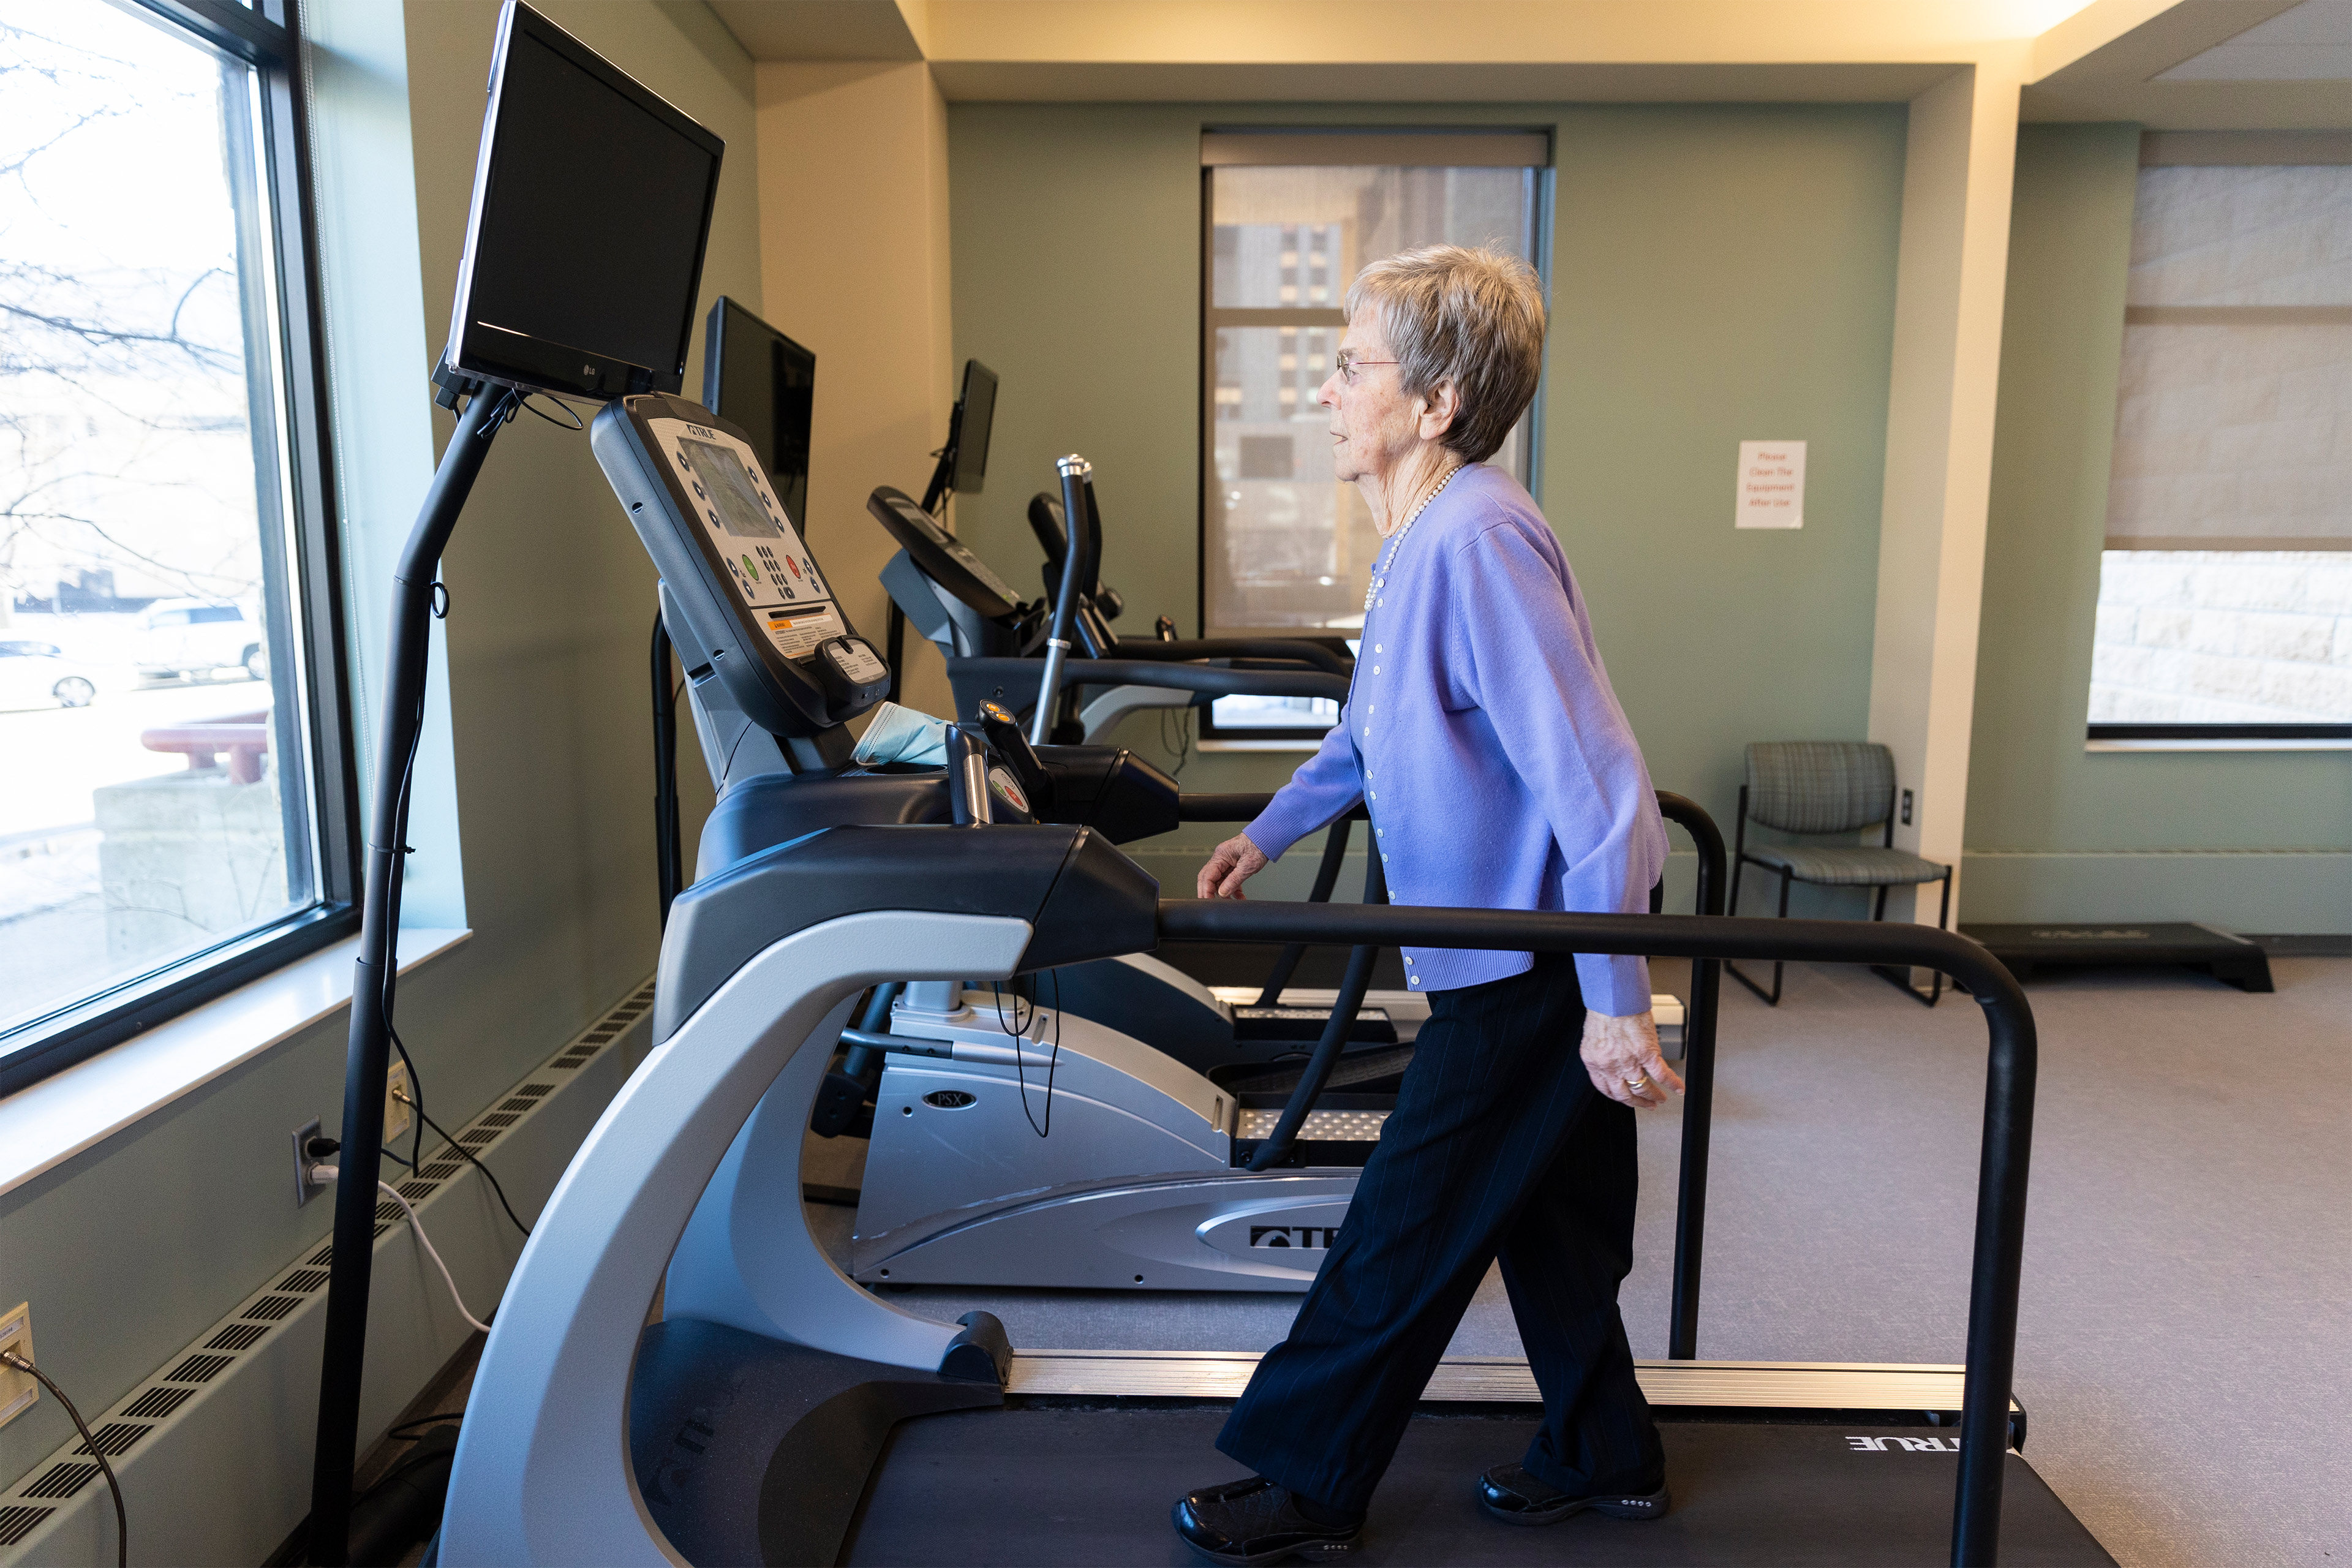 A photo shows Lore Wilkinson walking on a treadmill.